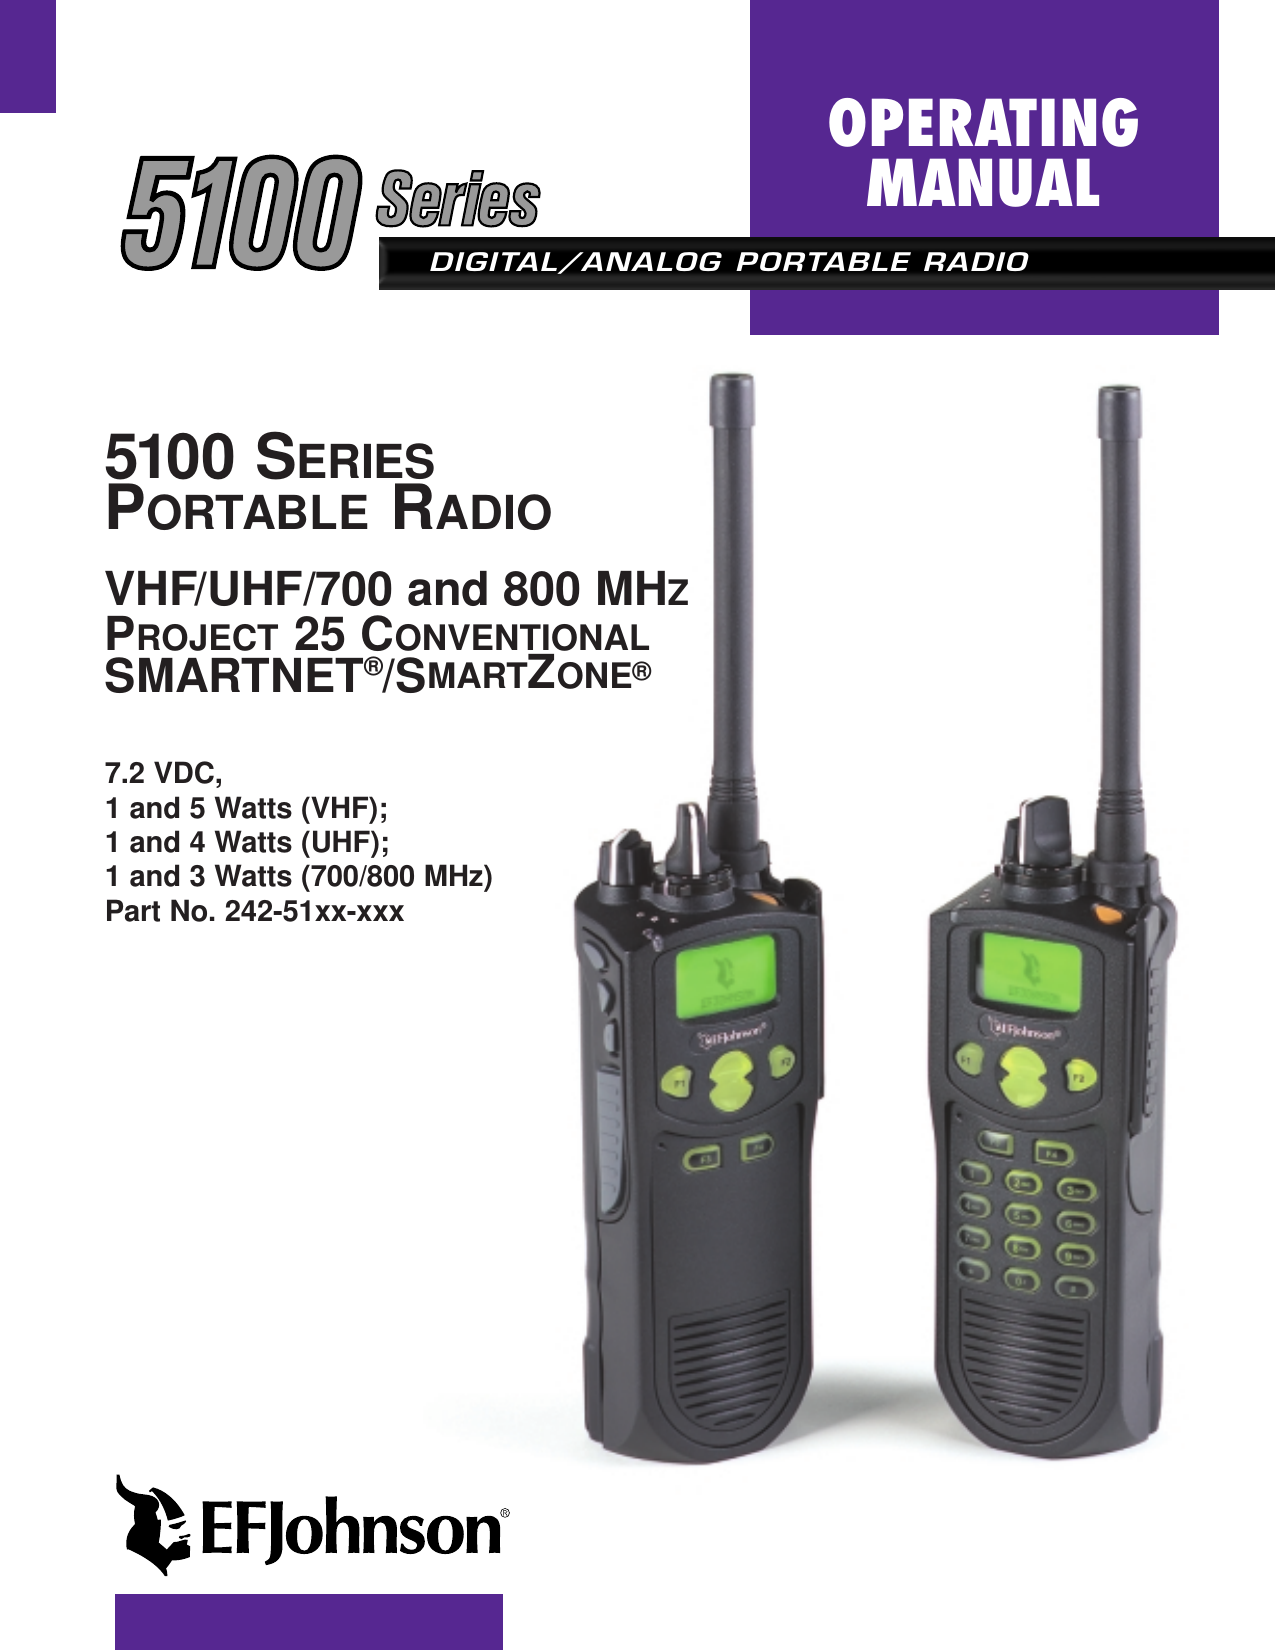 DIGITAL/ANALOG PORTABLE RADIOOPERATINGMANUAL5100 SERIESPORTABLE RADIOVHF/UHF/700 and 800 MHZPROJECT 25 CONVENTIONALSMARTNET®/SMARTZONE®7.2 VDC, 1 and 5 Watts (VHF);1 and 4 Watts (UHF);1 and 3 Watts (700/800 MHz) Part No. 242-51xx-xxx